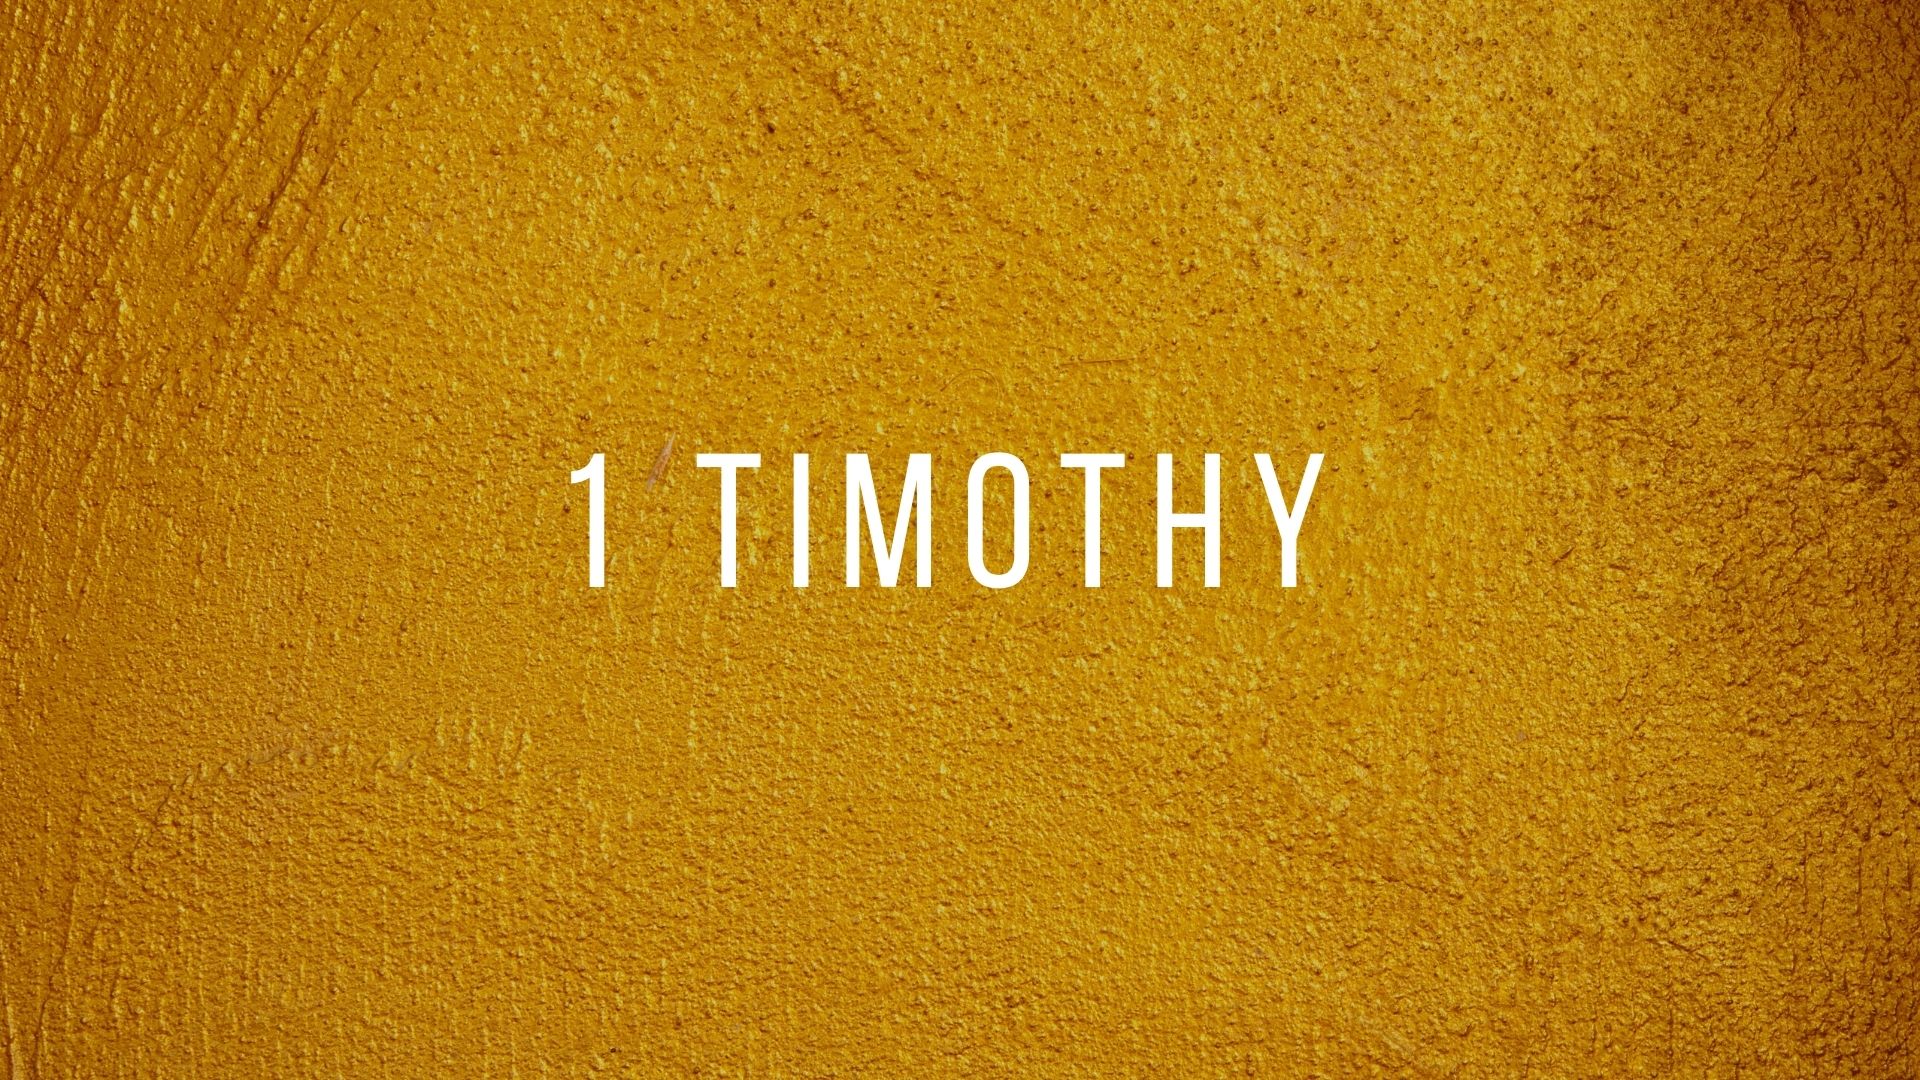 1st Timothy banner